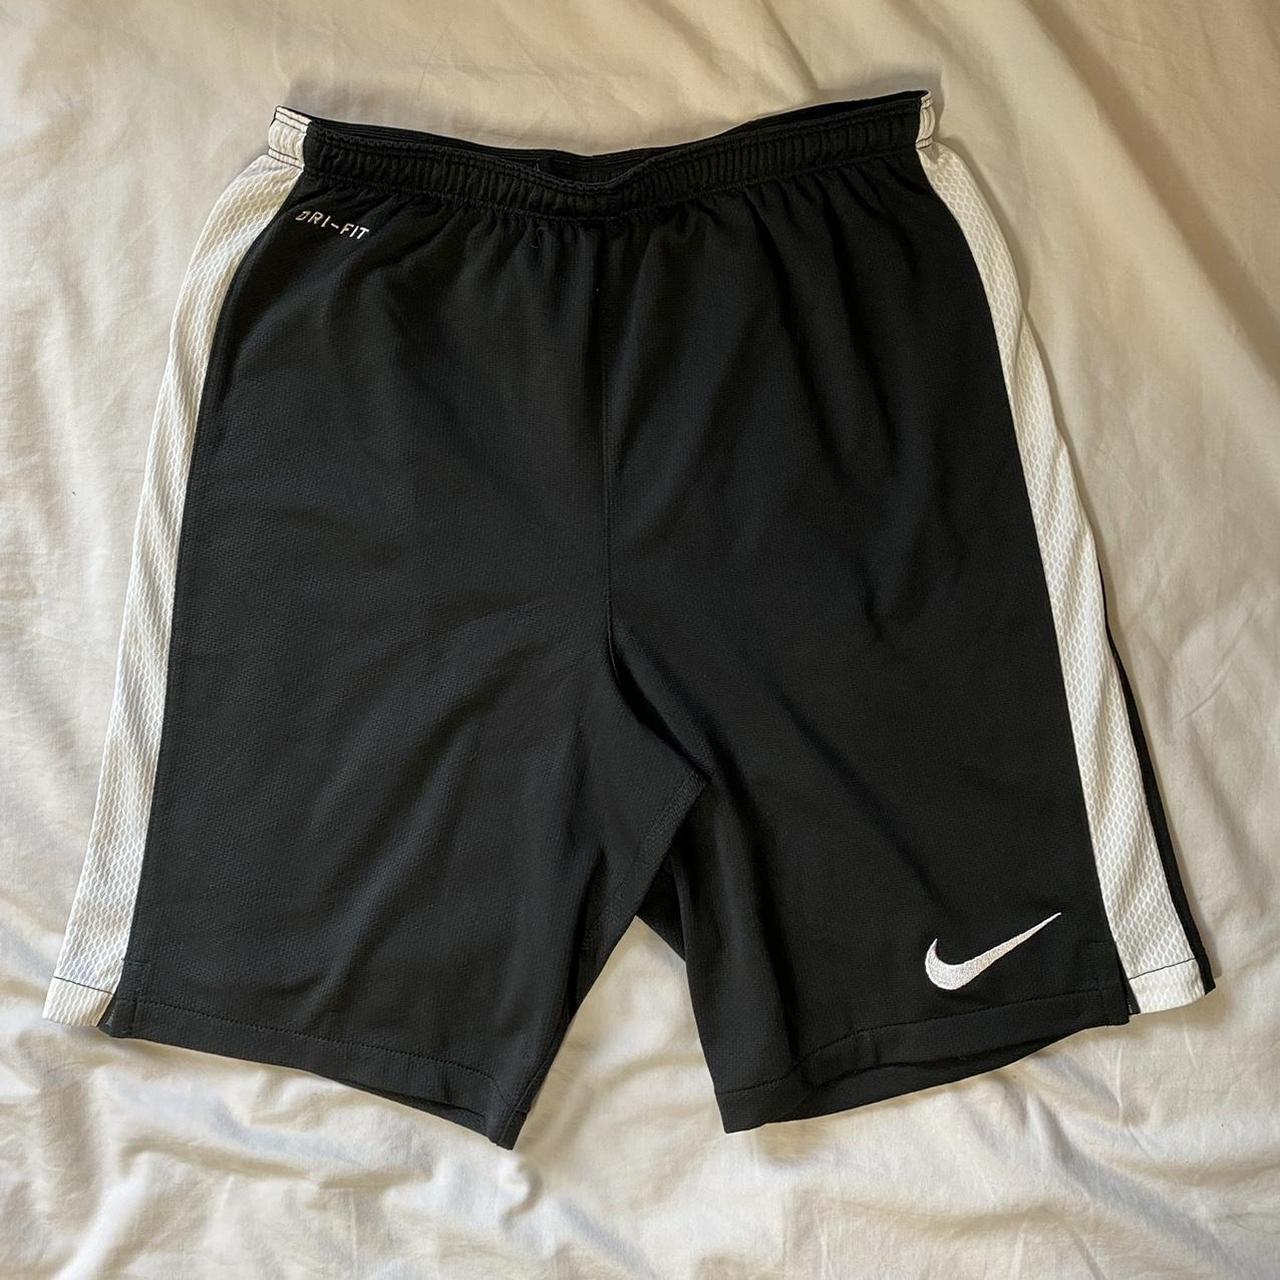 Nike Men's Black and White Shorts | Depop